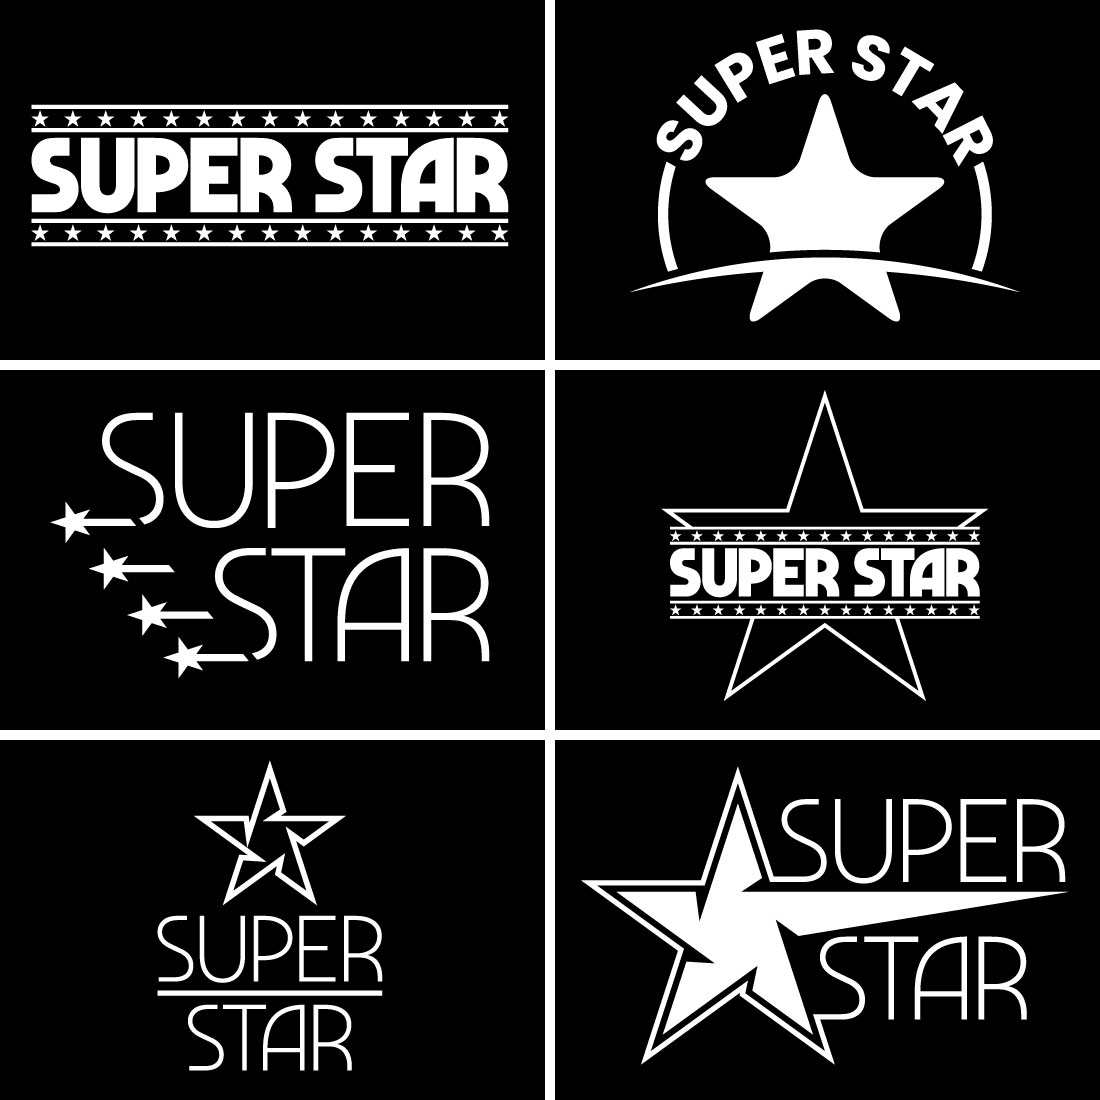 Super Star Club